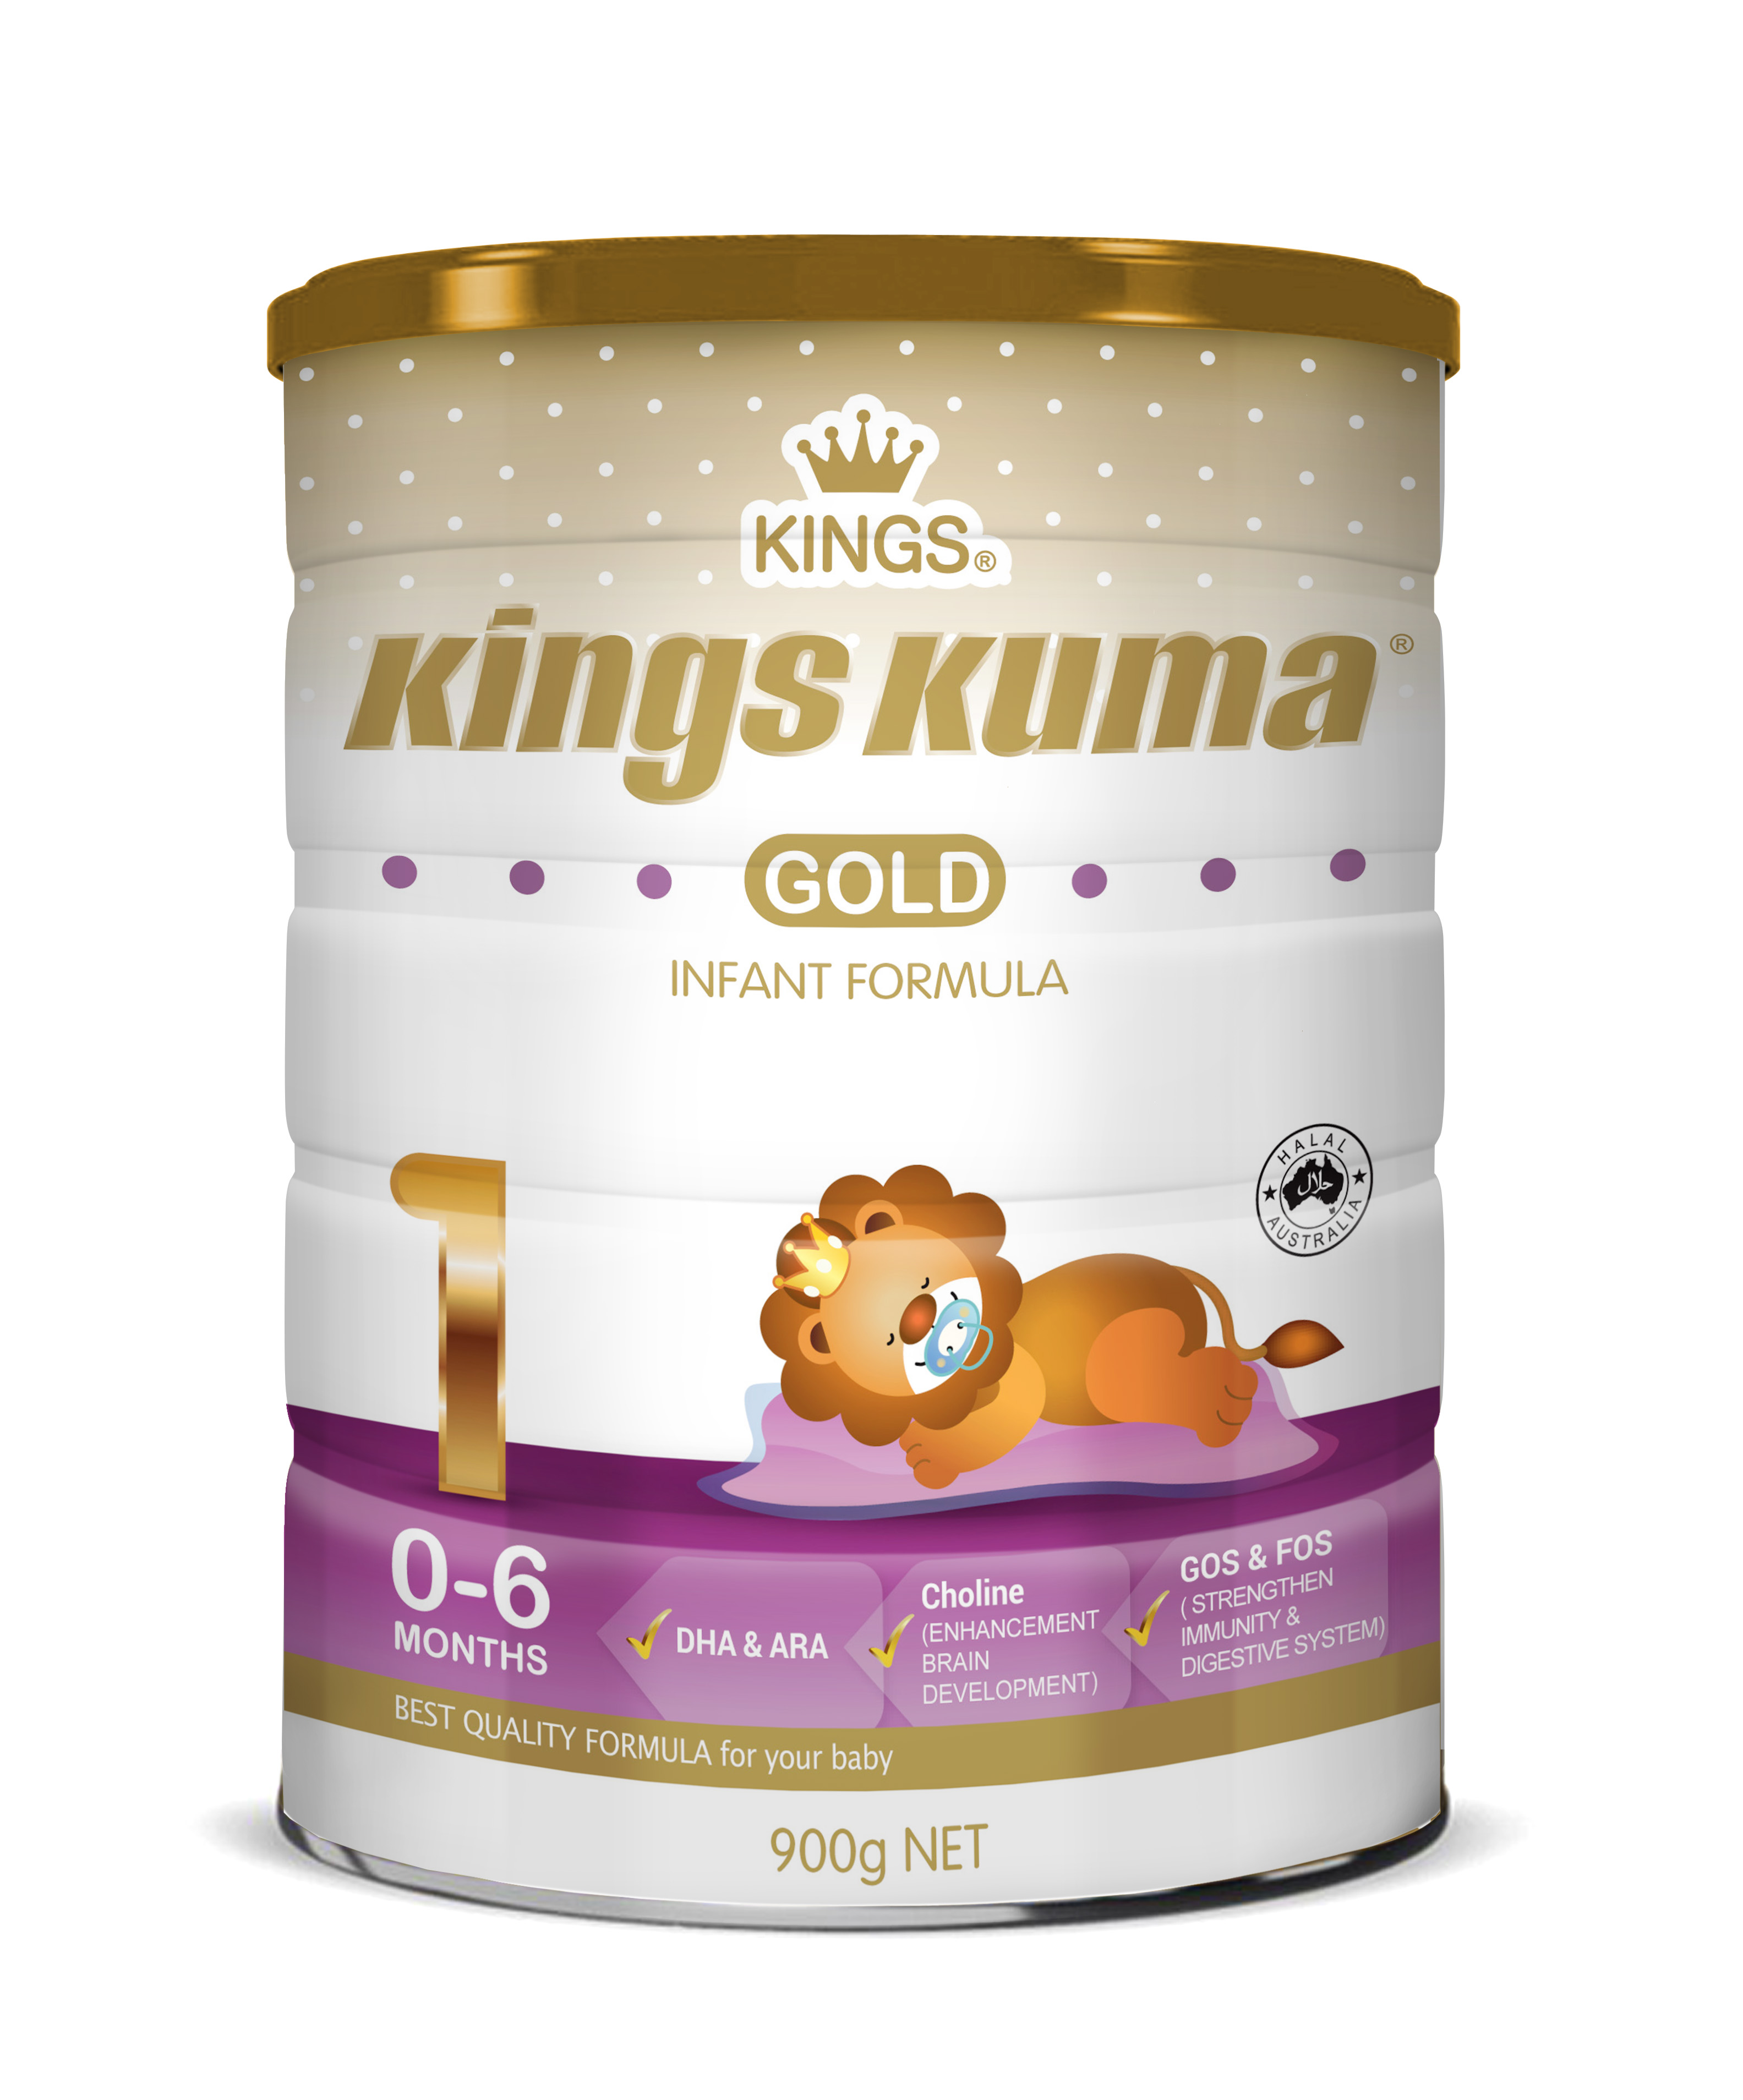 KINGS KUMA Infant Formula Step 1 (0-6 months)